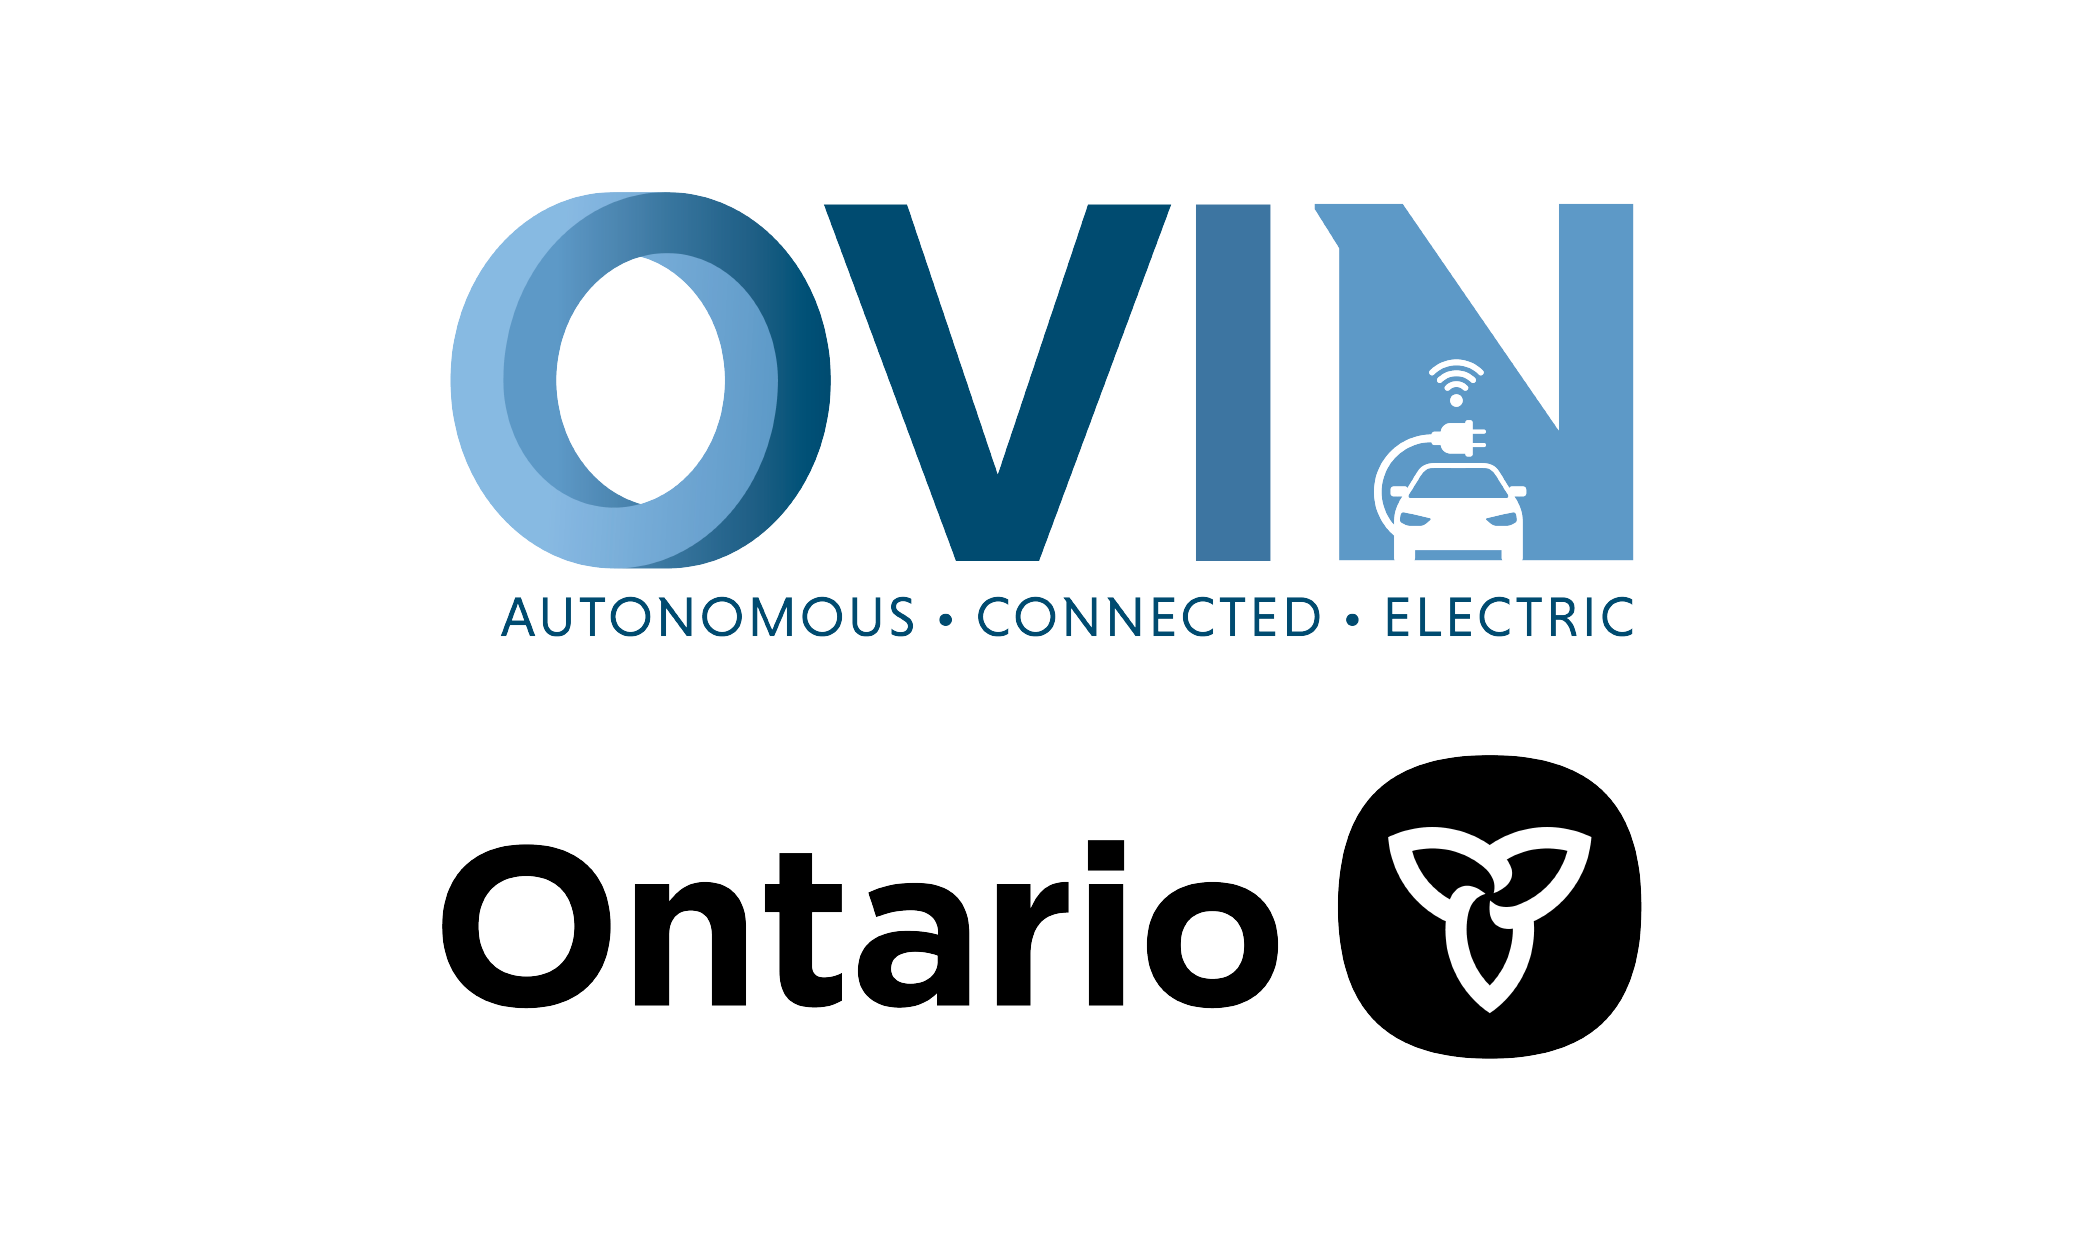 OVIN Ontario logo